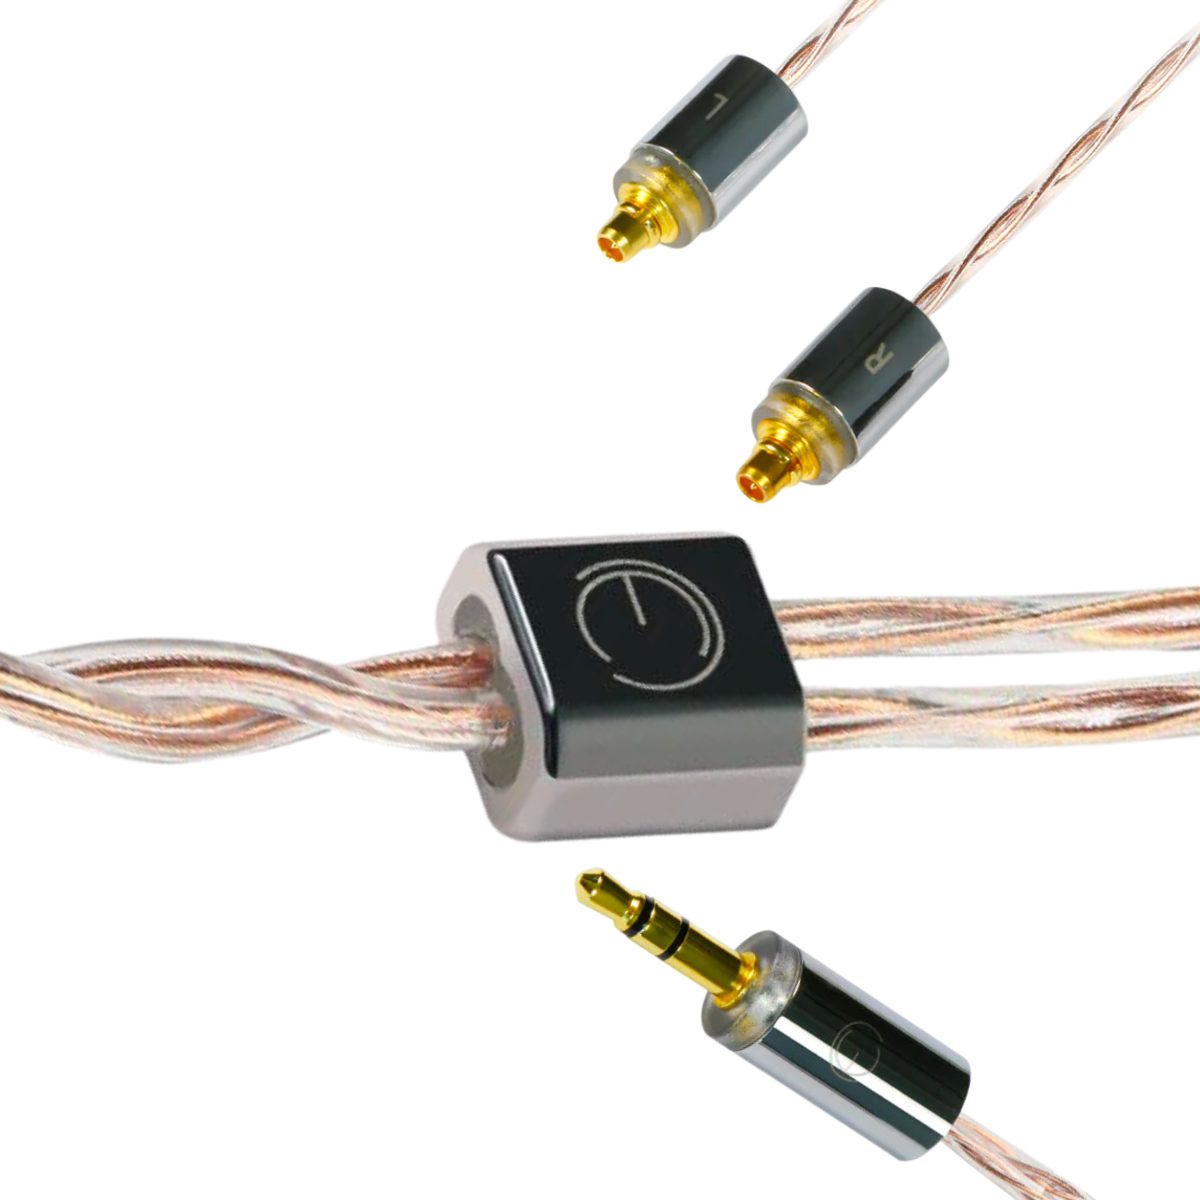 OE Audio 2DualCDC Oxygen-Free-Copper IEM Upgrade Cable